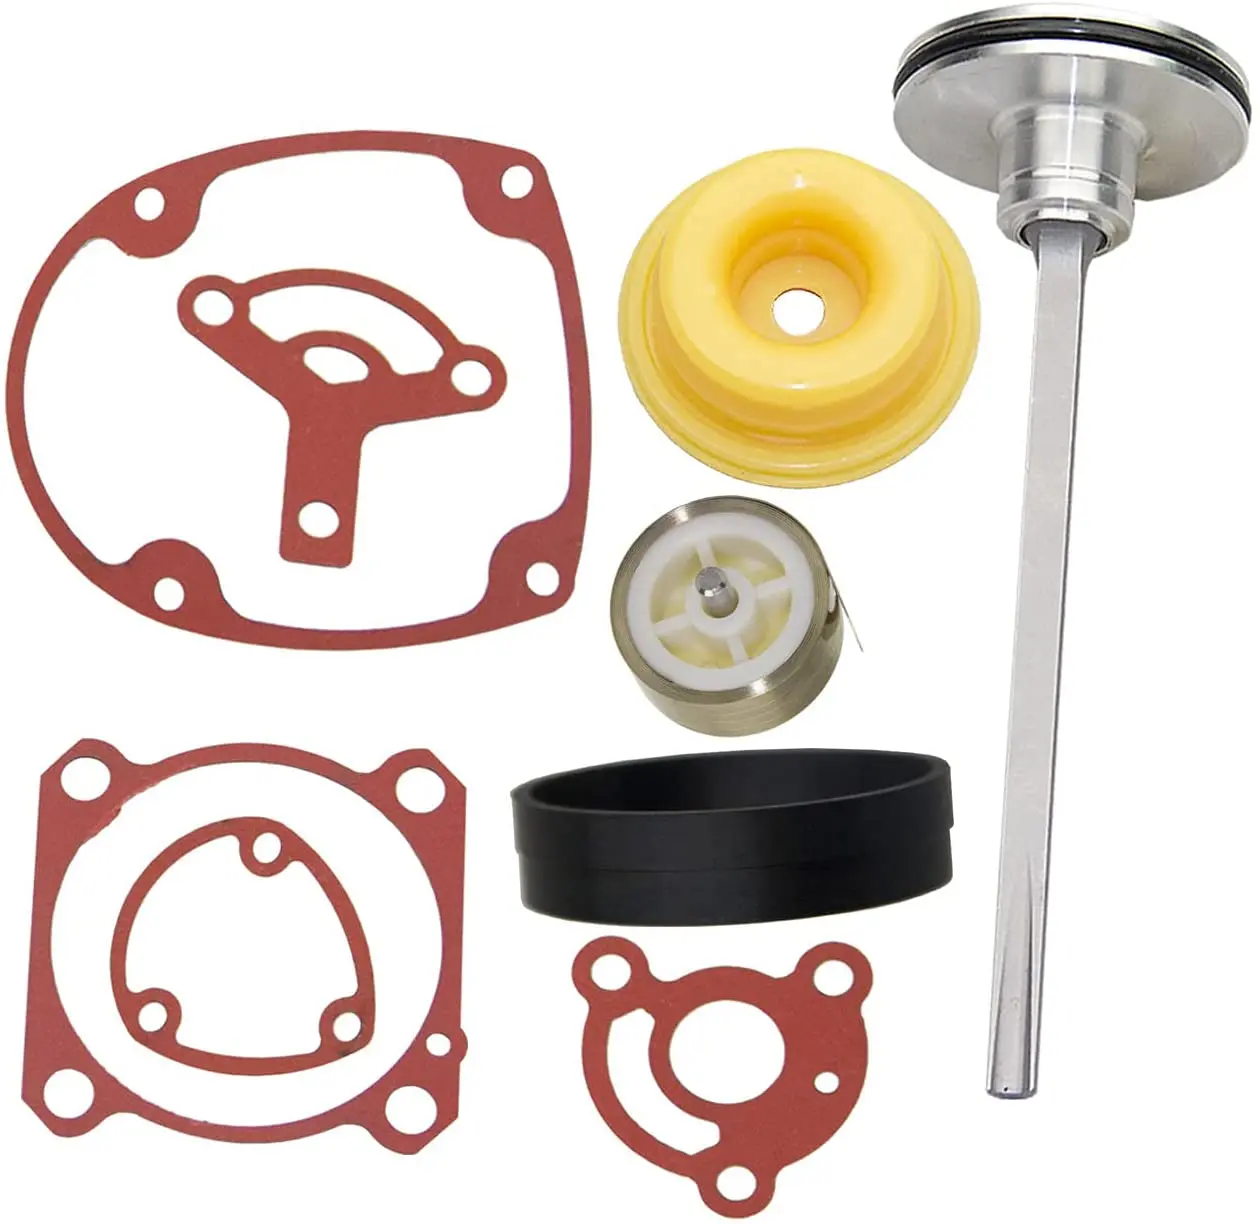 Replacement Seal Gasket Kit For Hitachi NR83 NV83 Nail Guns Head 